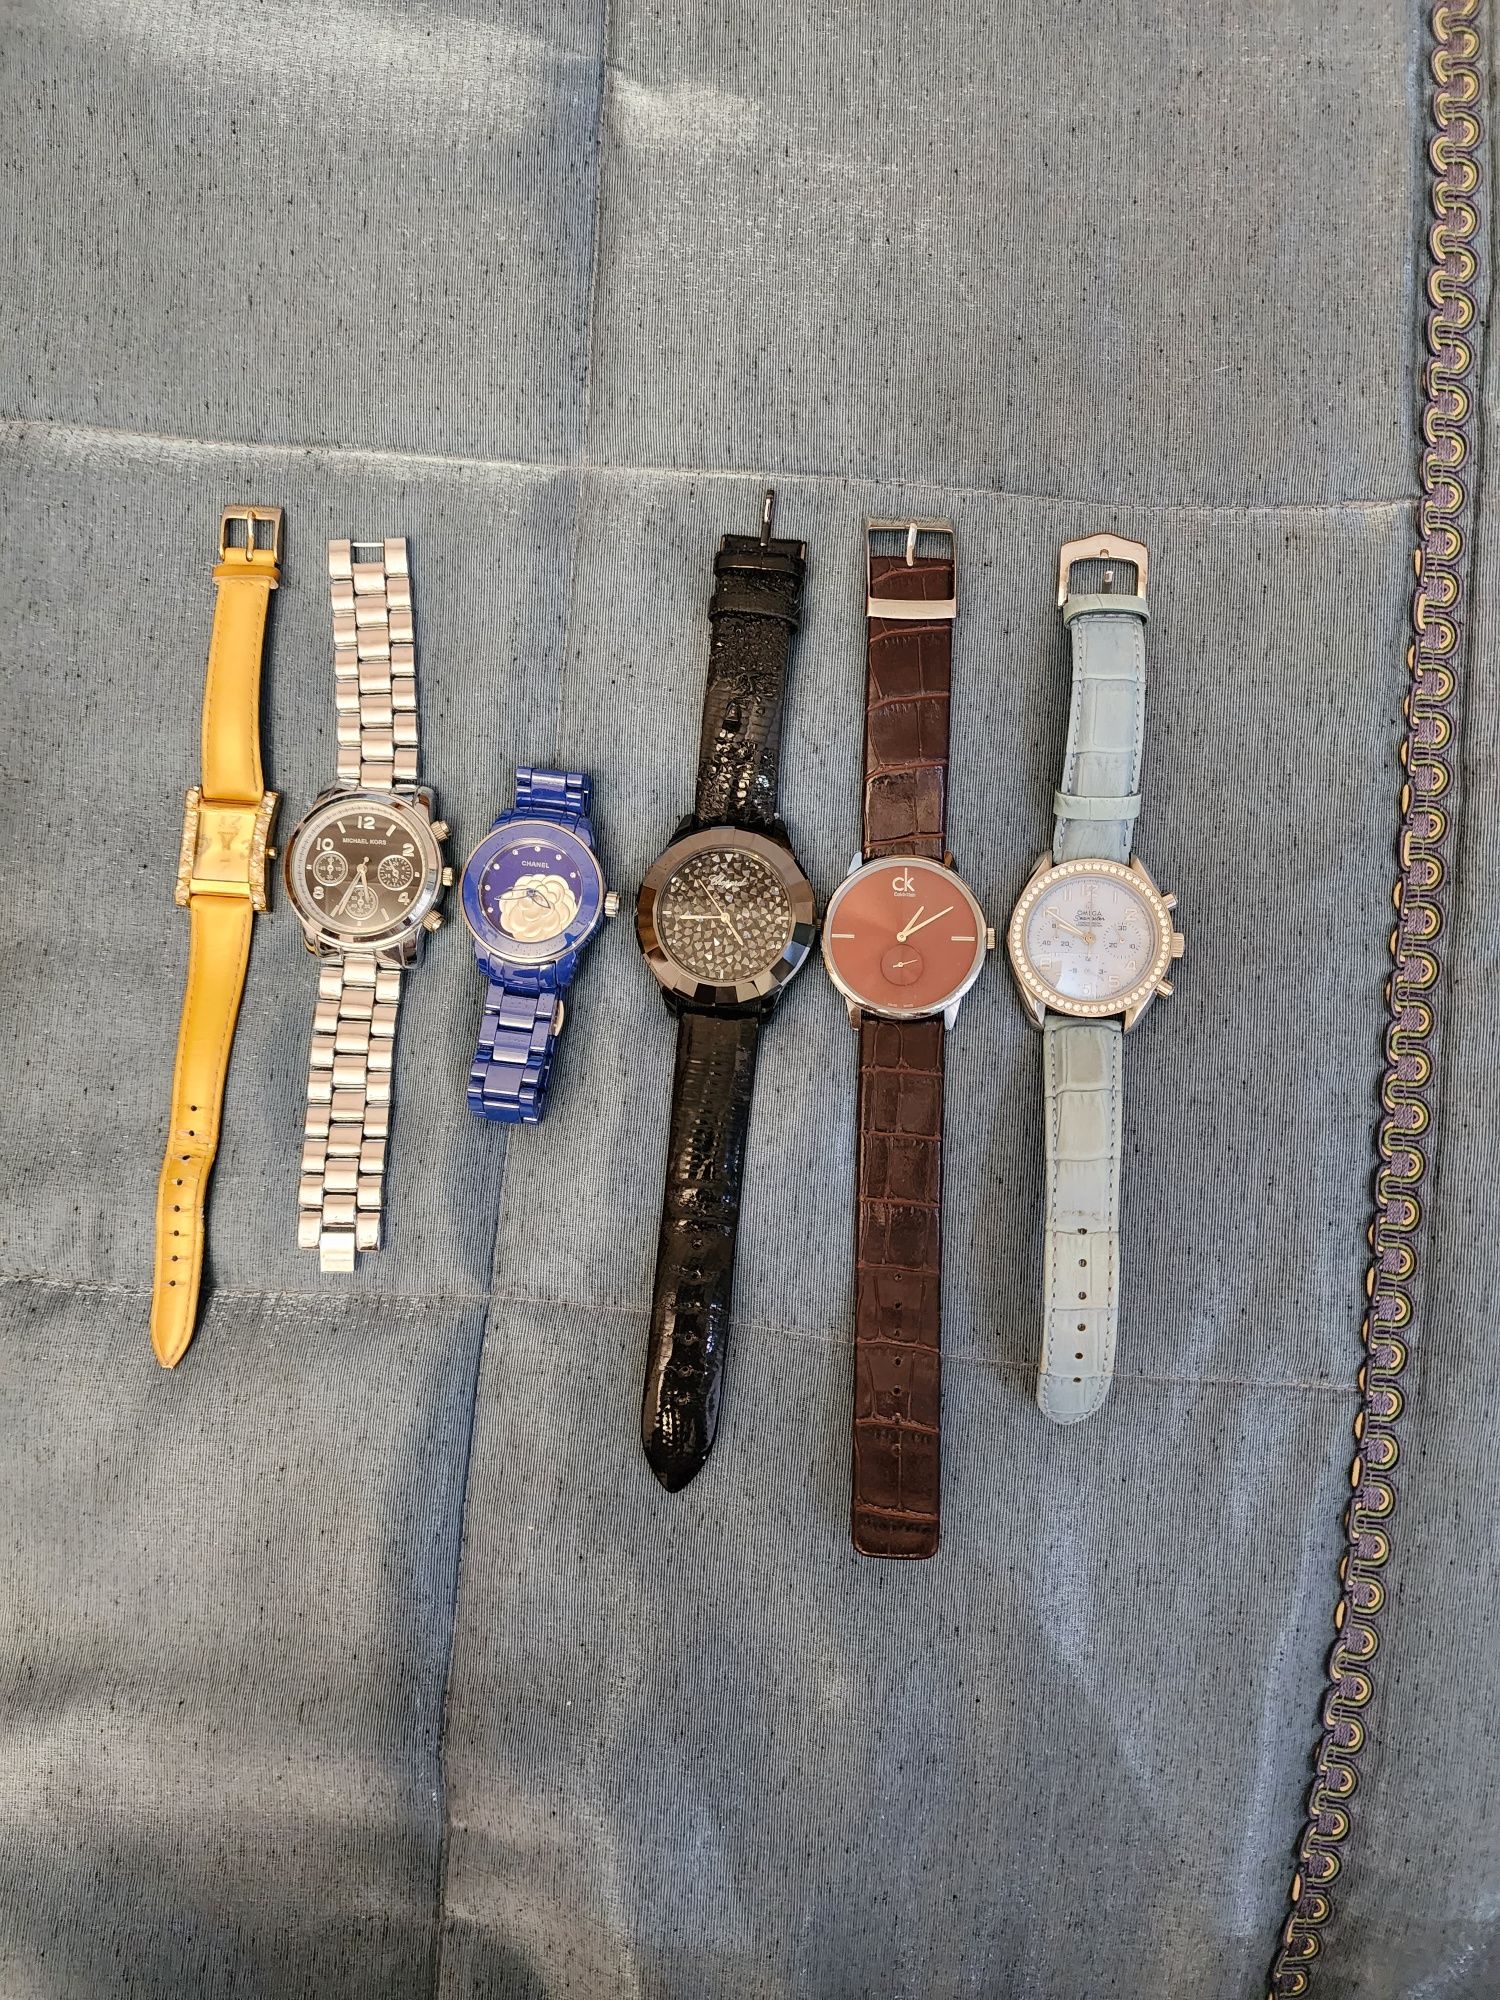 Продаётся часы разные все бренды